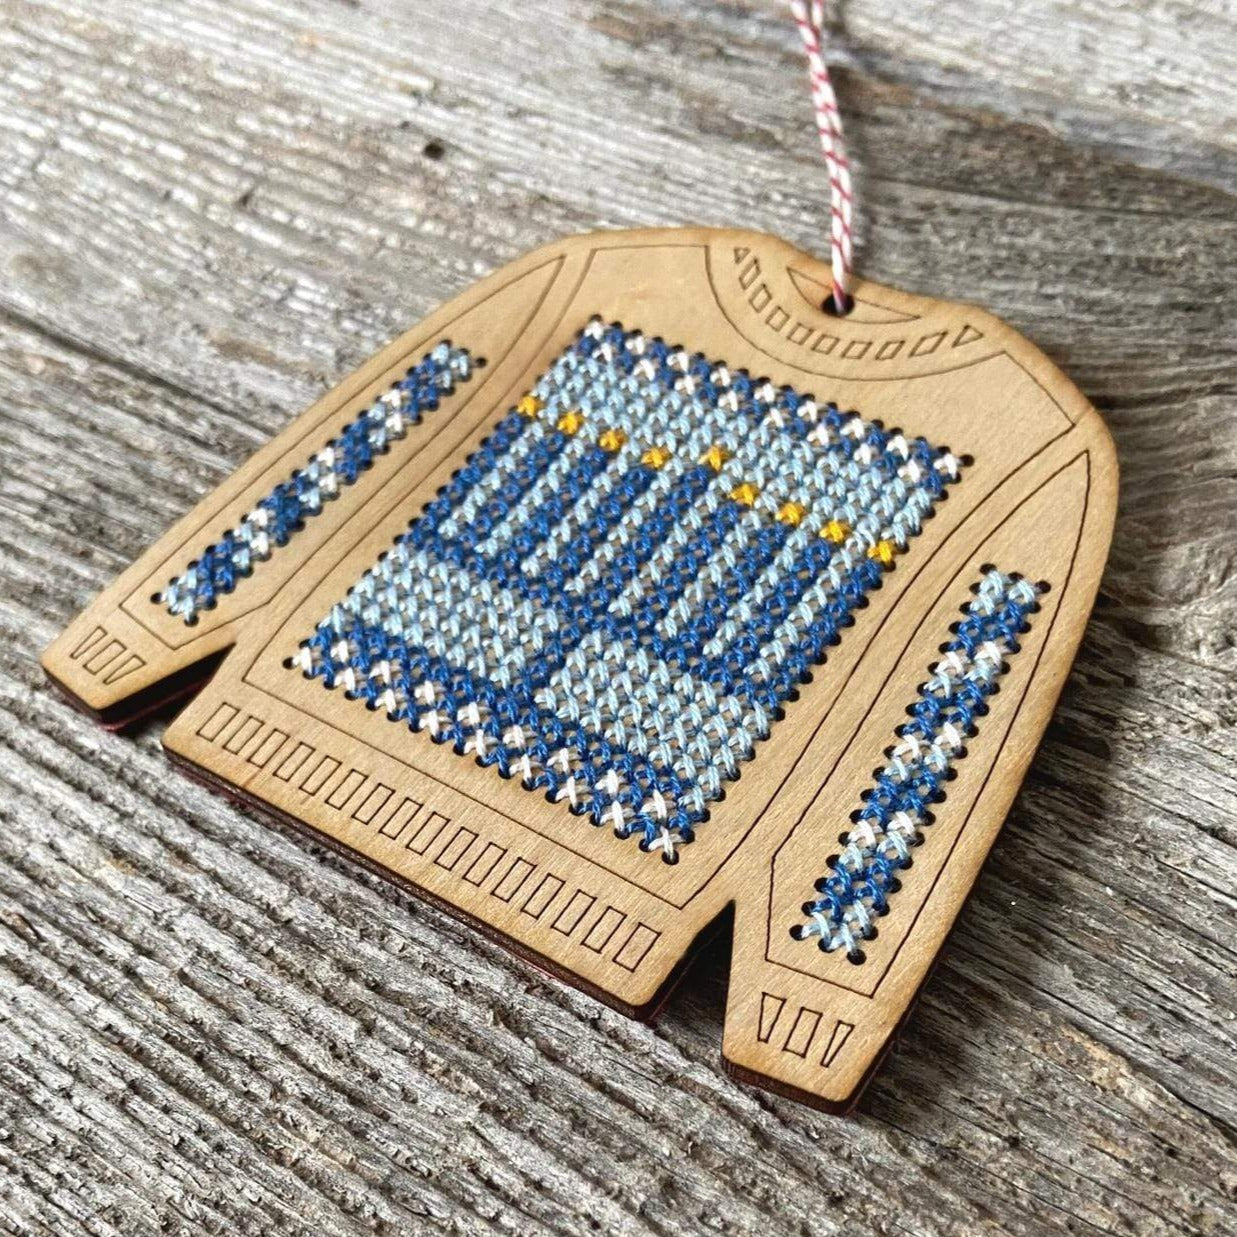 Ugly Menorah Sweater DIY Cross Stitch Ornament Kit